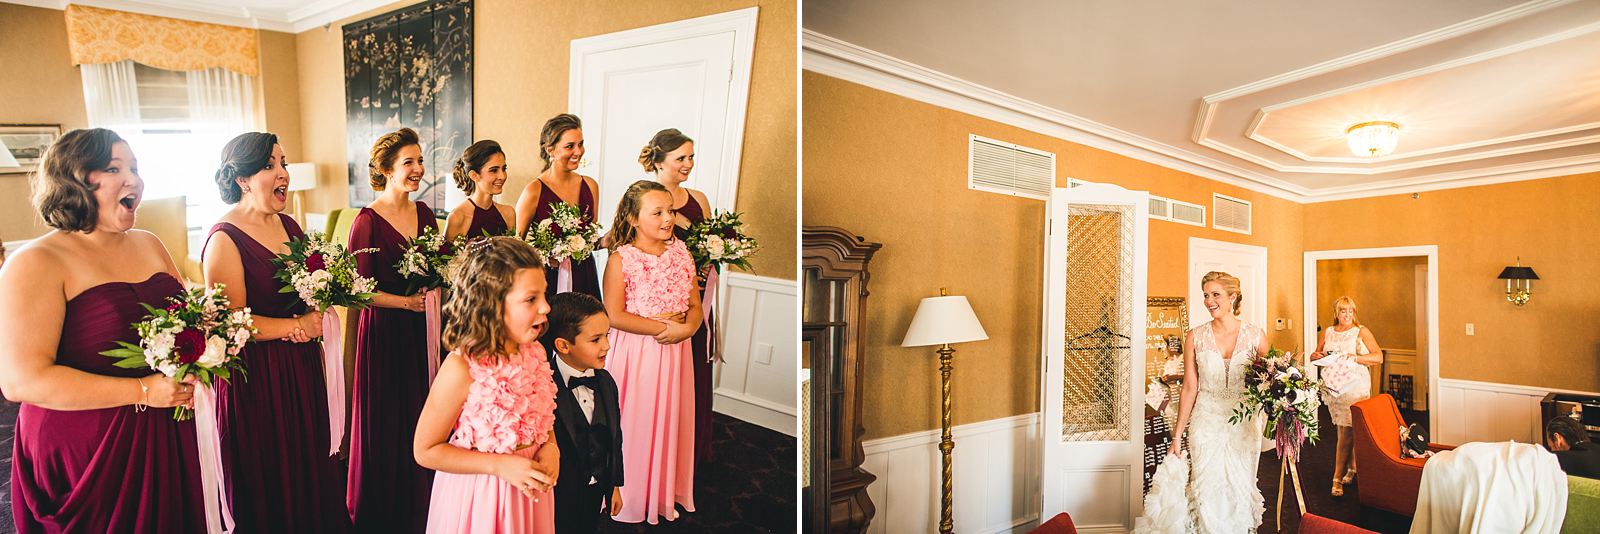 15 bridesmaids first look with bride photos - Chicago Drake Hotel Wedding // Corie + Jordan